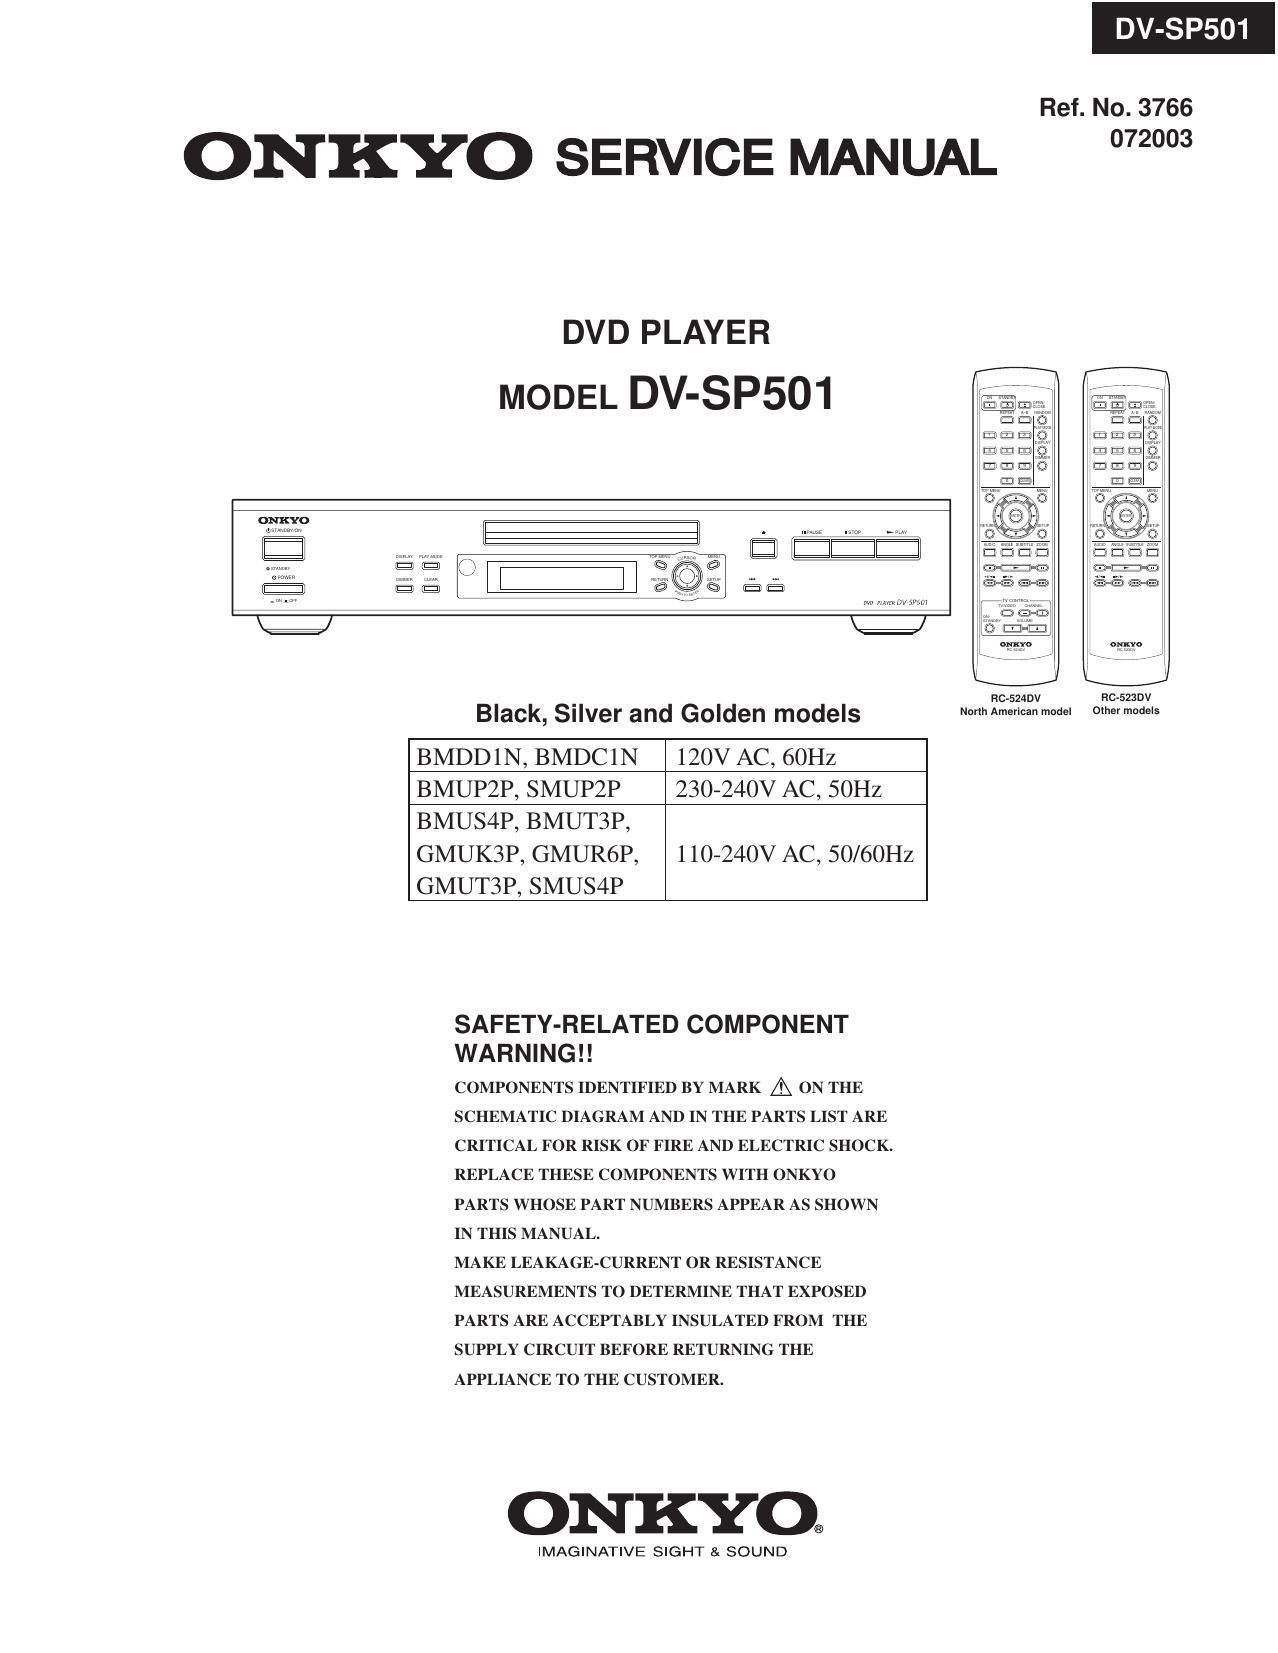 Onkyo DVSP 501 Service Manual